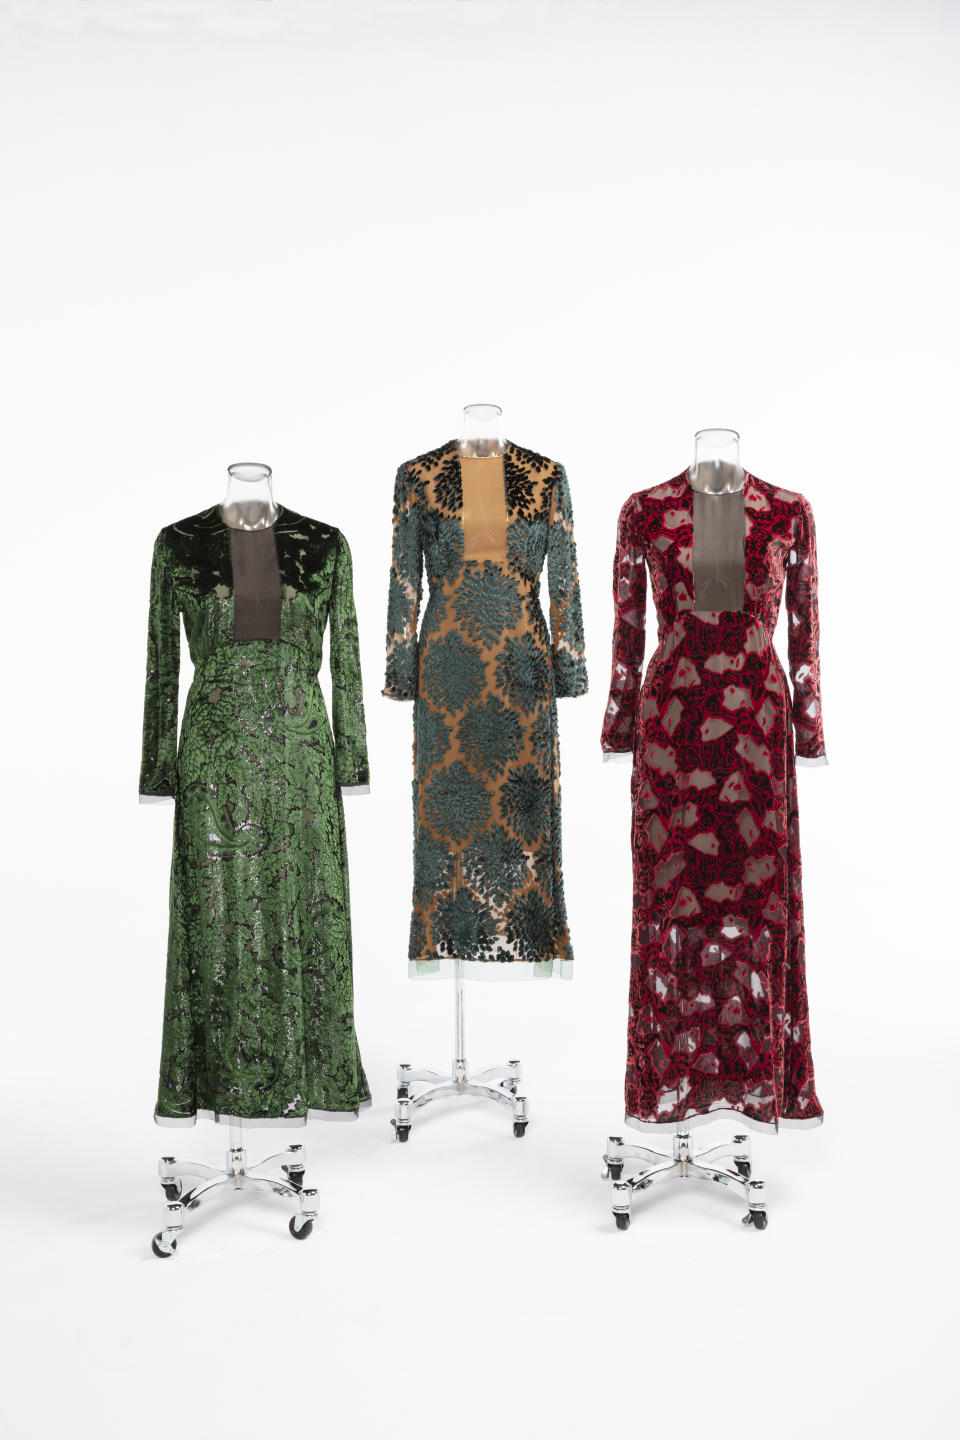 Shapely dresses designed by Geoffrey Beene. Courtesy Phoenix Art Museum